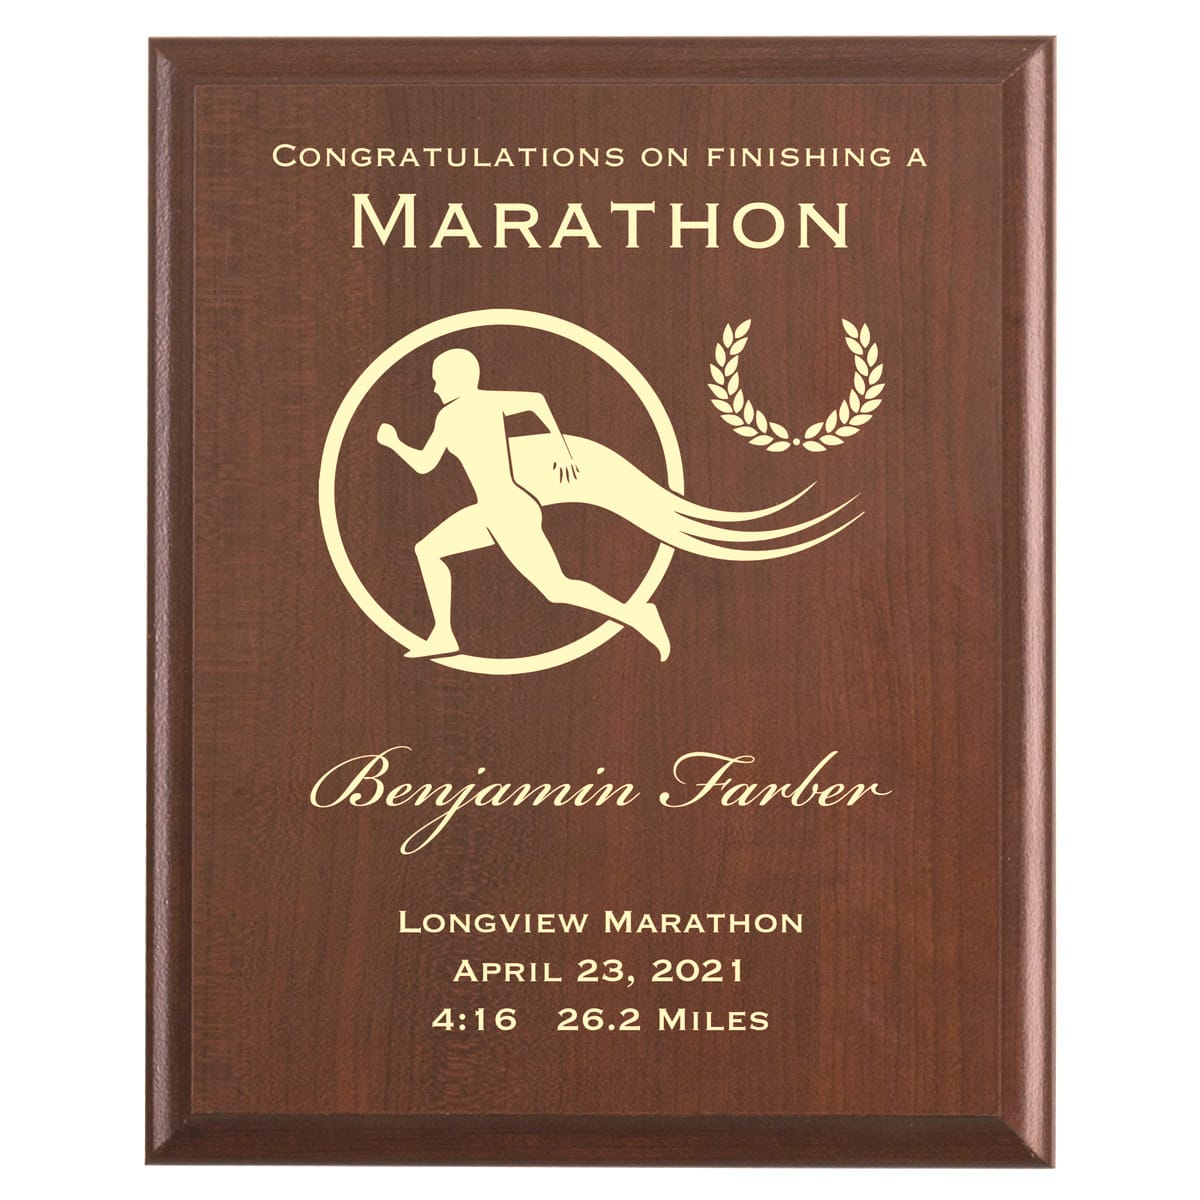 Plaque photo: Full Marathon Finisher Award design with free personalization. Wood style finish with customized text.